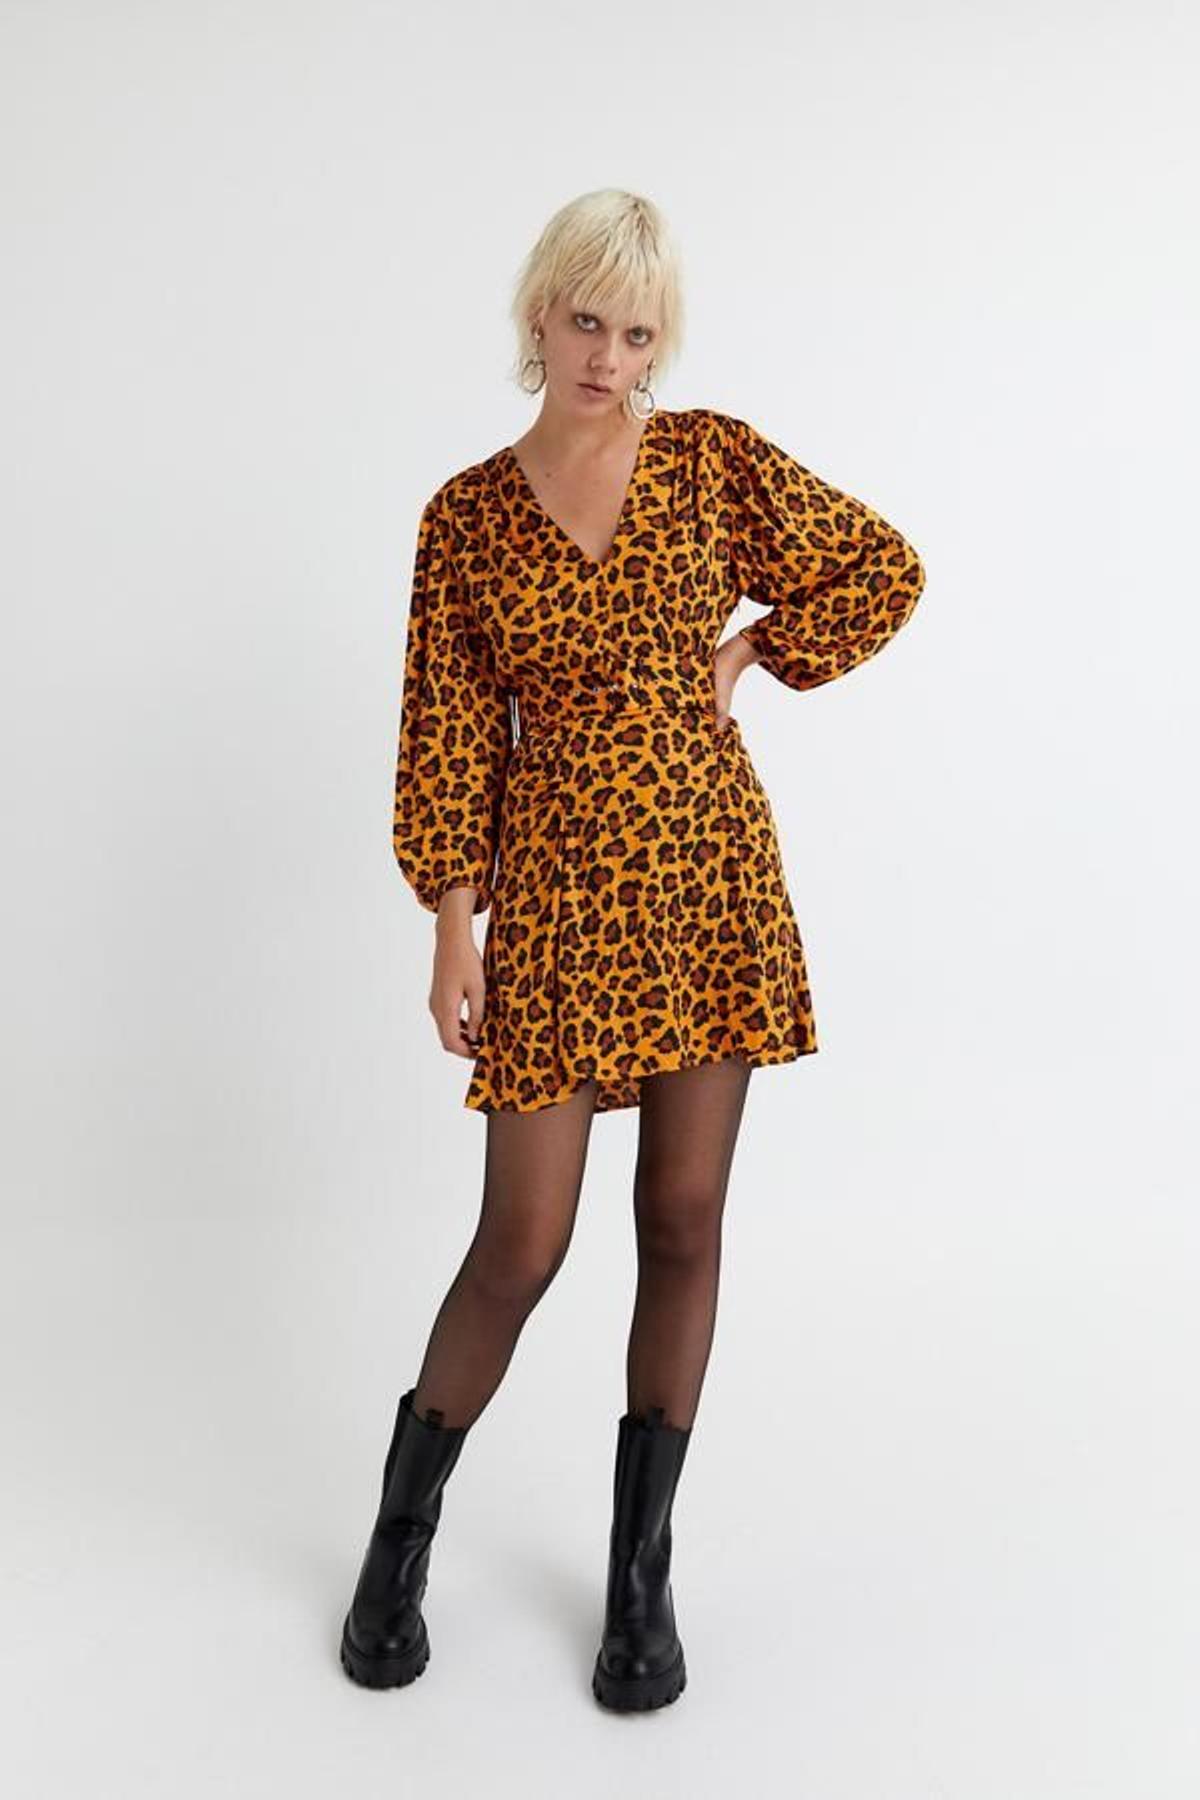 Vestido mini con print de leopardo. Rebajado de 39,99 a 19,99 euros.